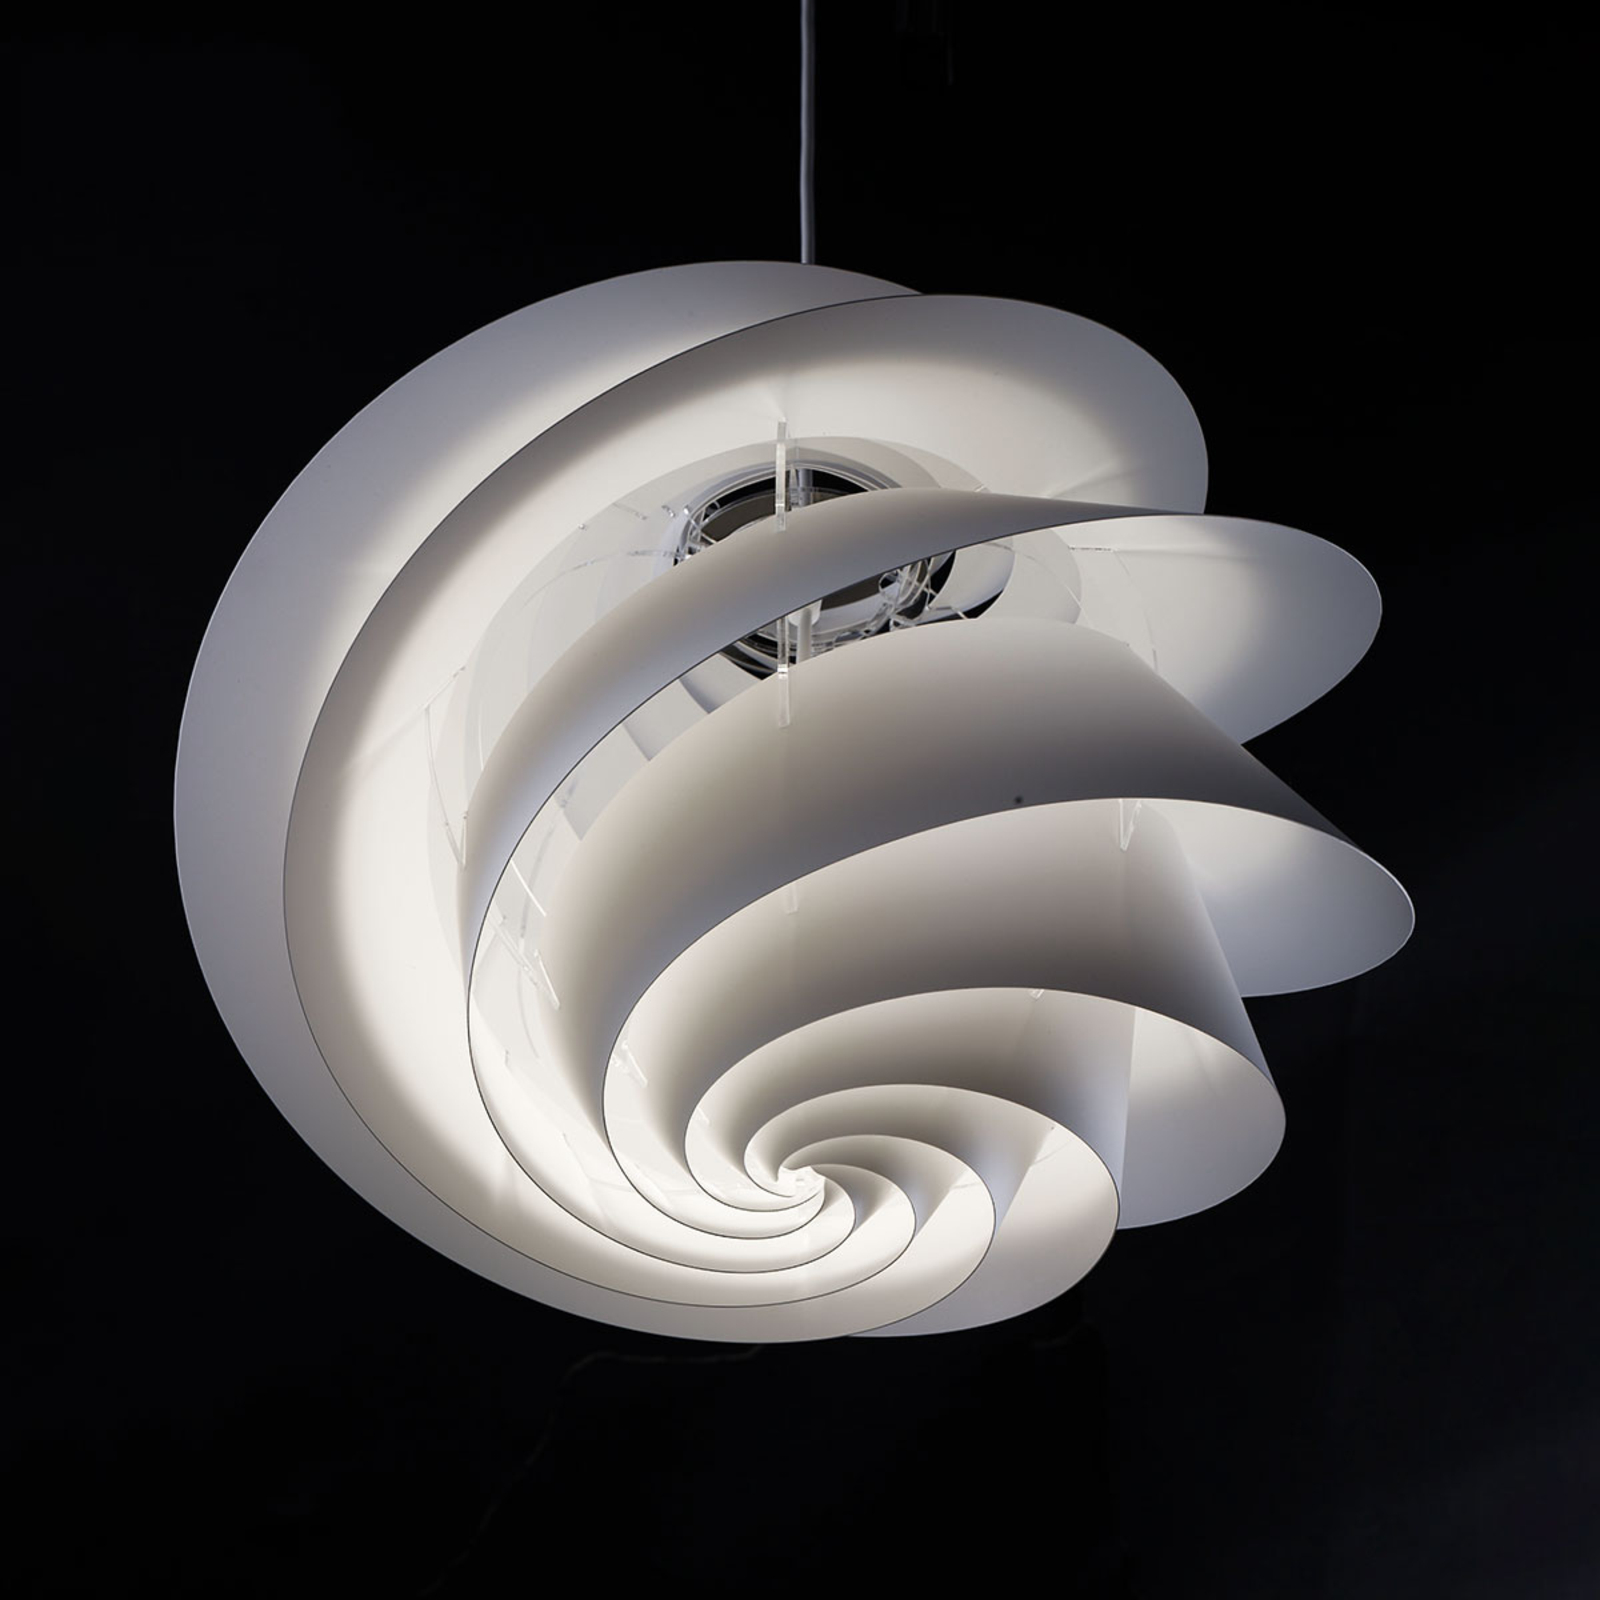 LE KLINT Swirl 3 Medium - hanglamp in wit